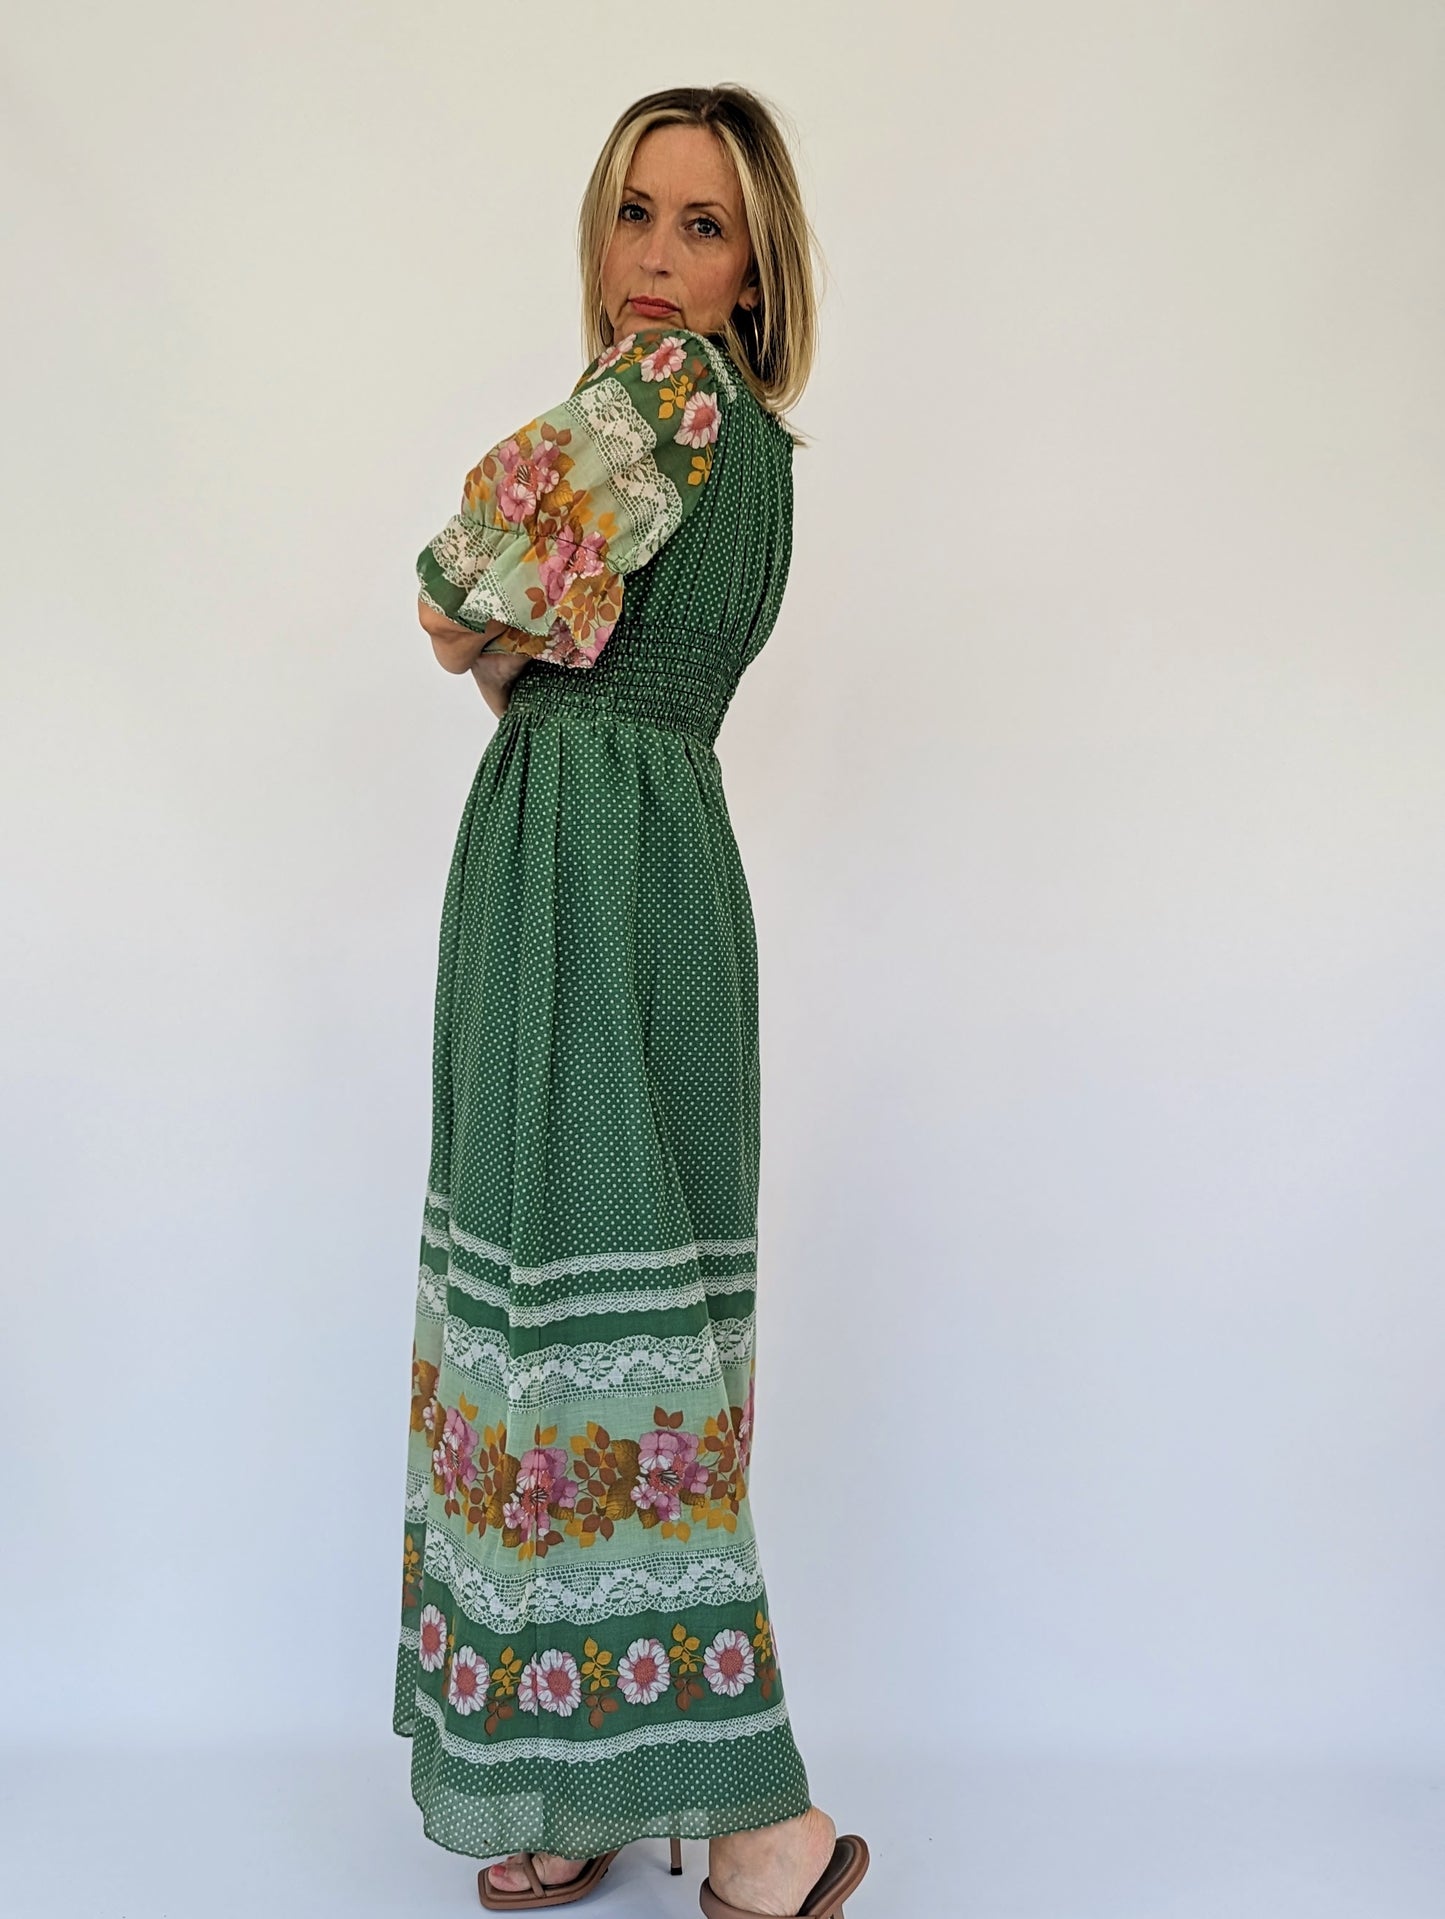 patterned long 1970's dress